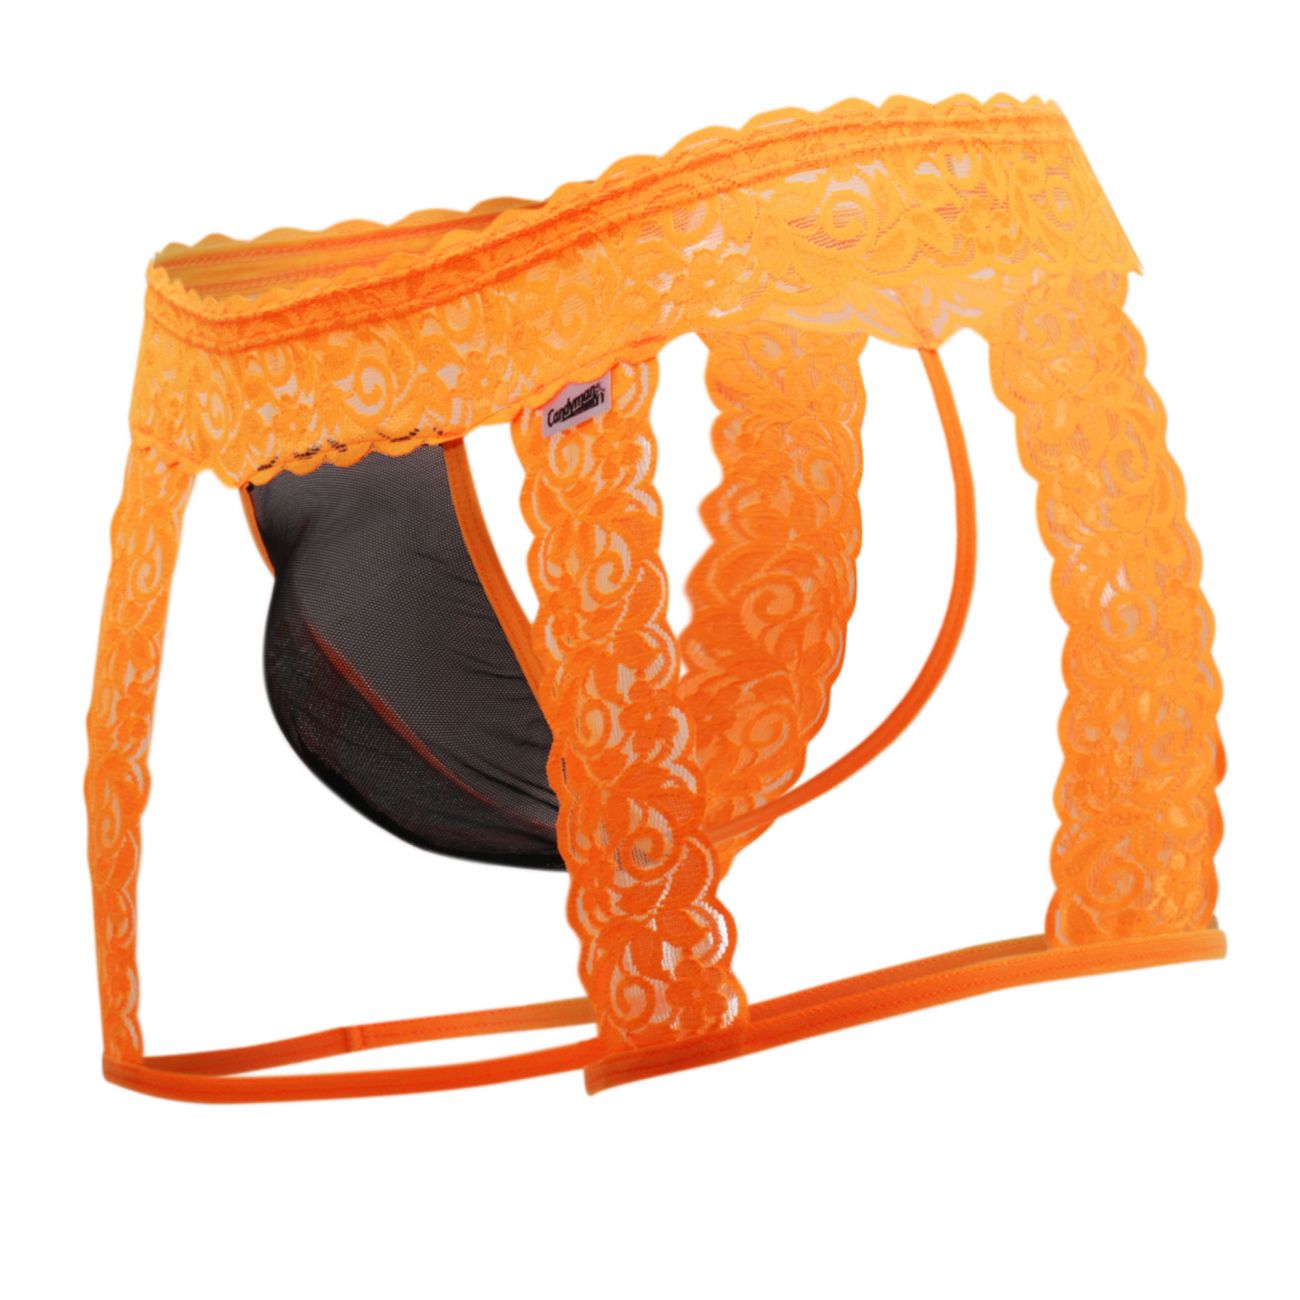 JCSTK - CandyMan 99369X Lace Thongs Hot Orange Plus Sizes